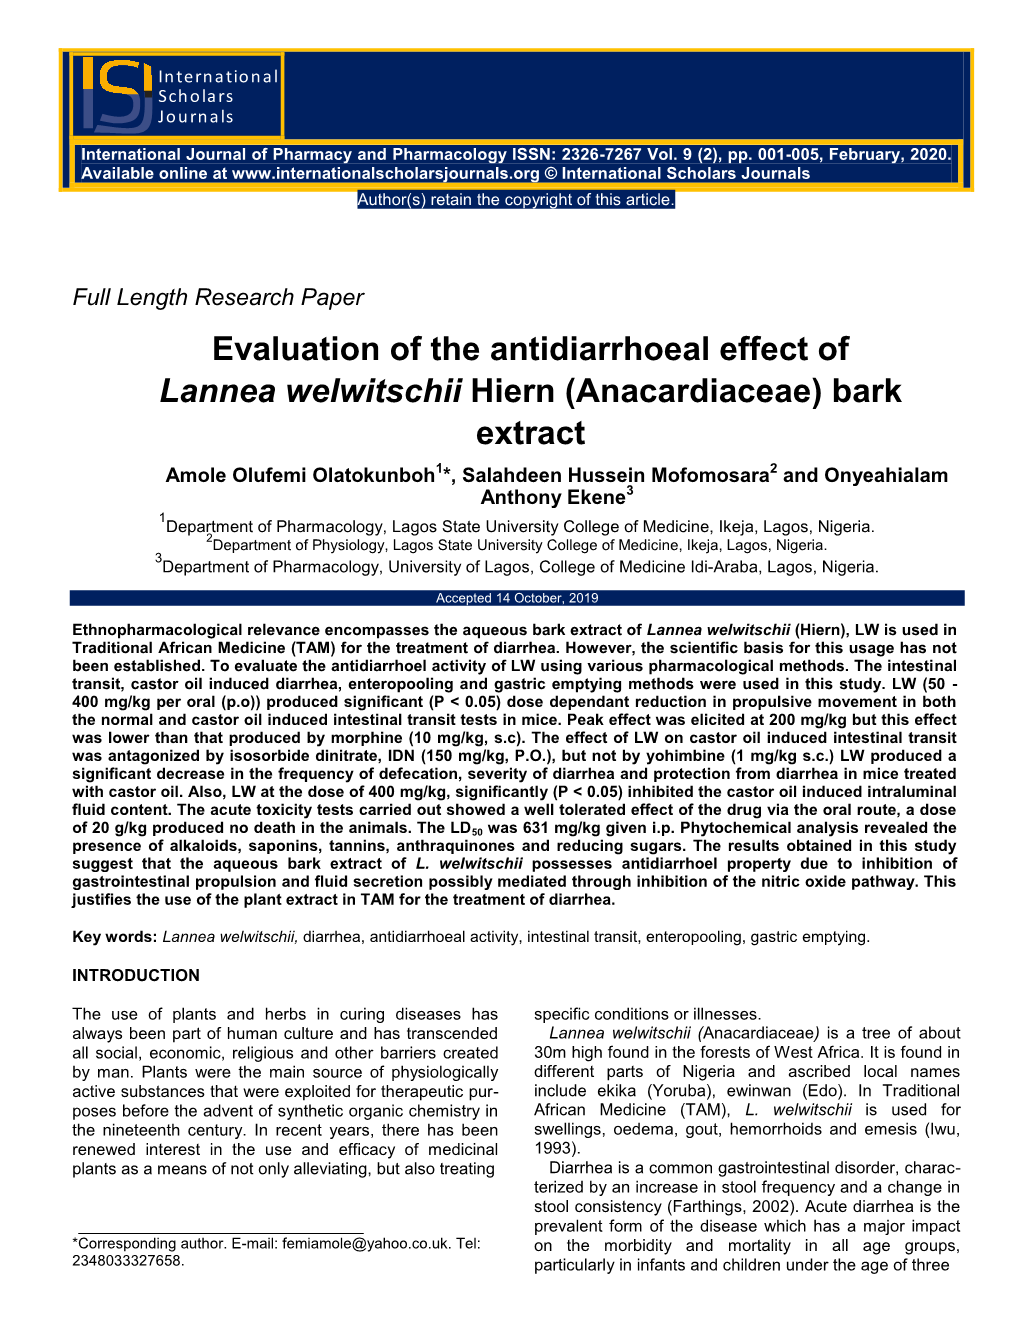 Evaluation of the Antidiarrhoeal Effect of Lannea Welwitschii Hiern (Anacardiaceae) Bark